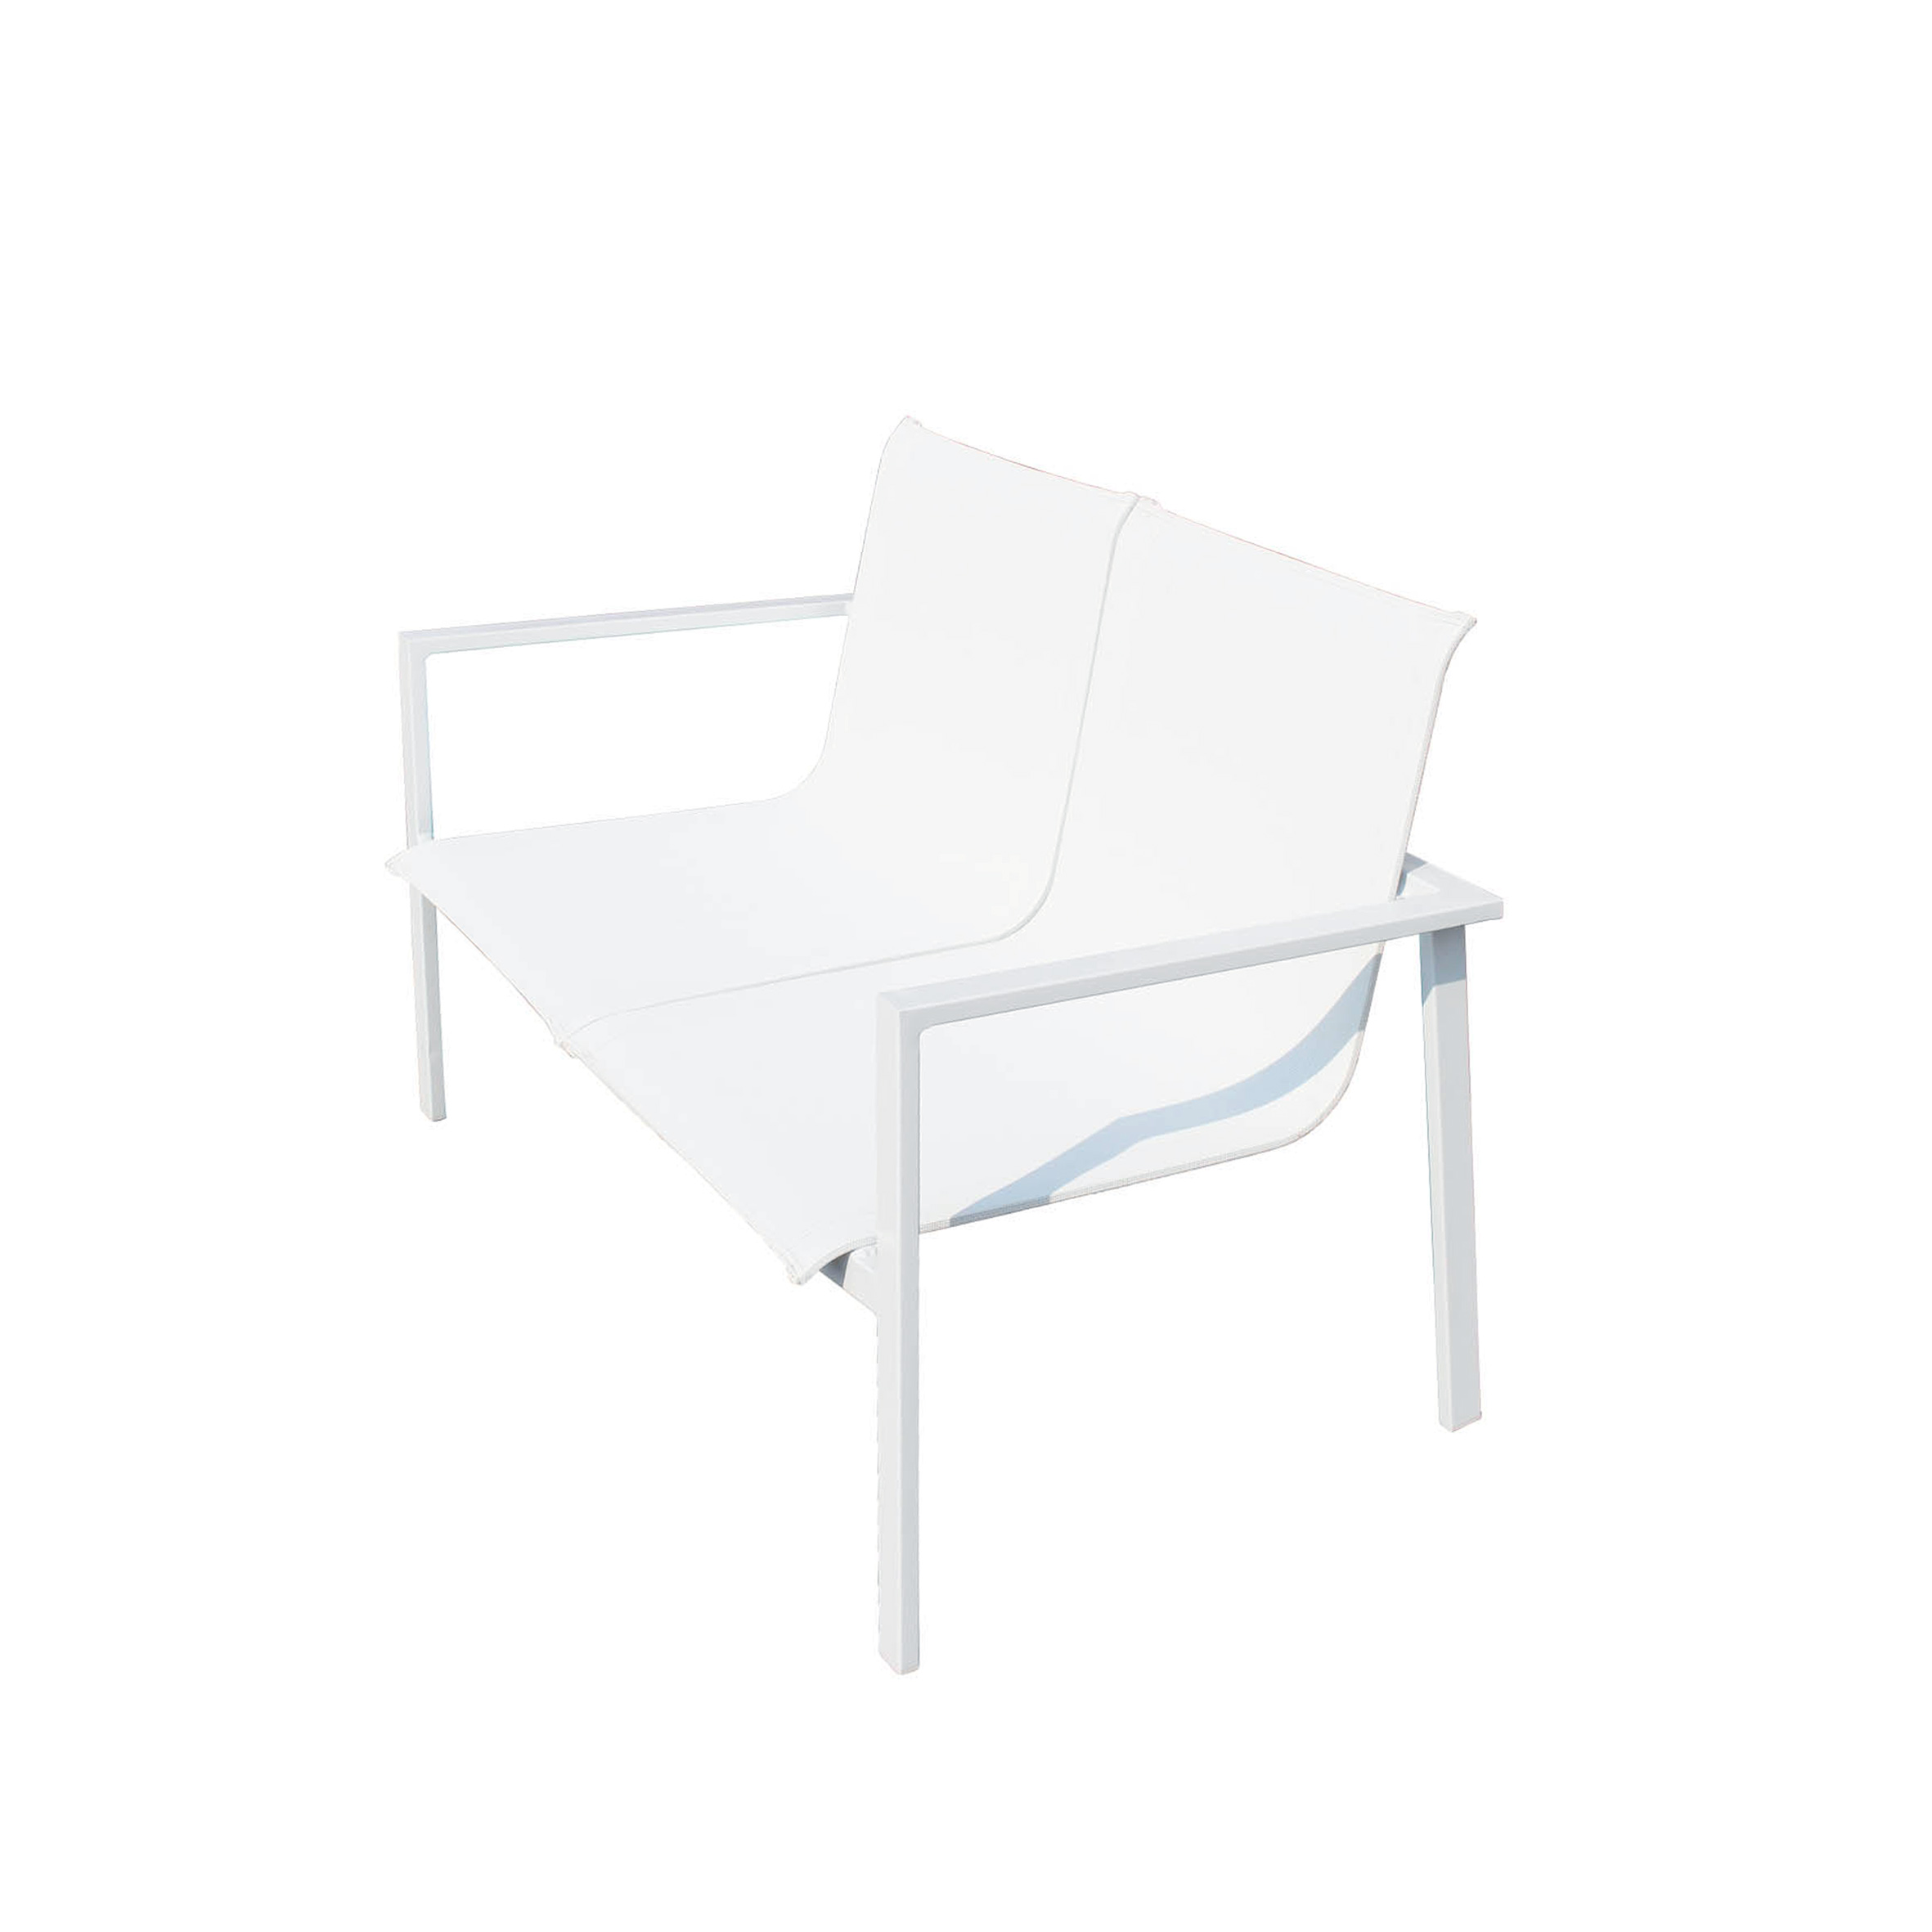 Valencia textile 2-seat chair S1